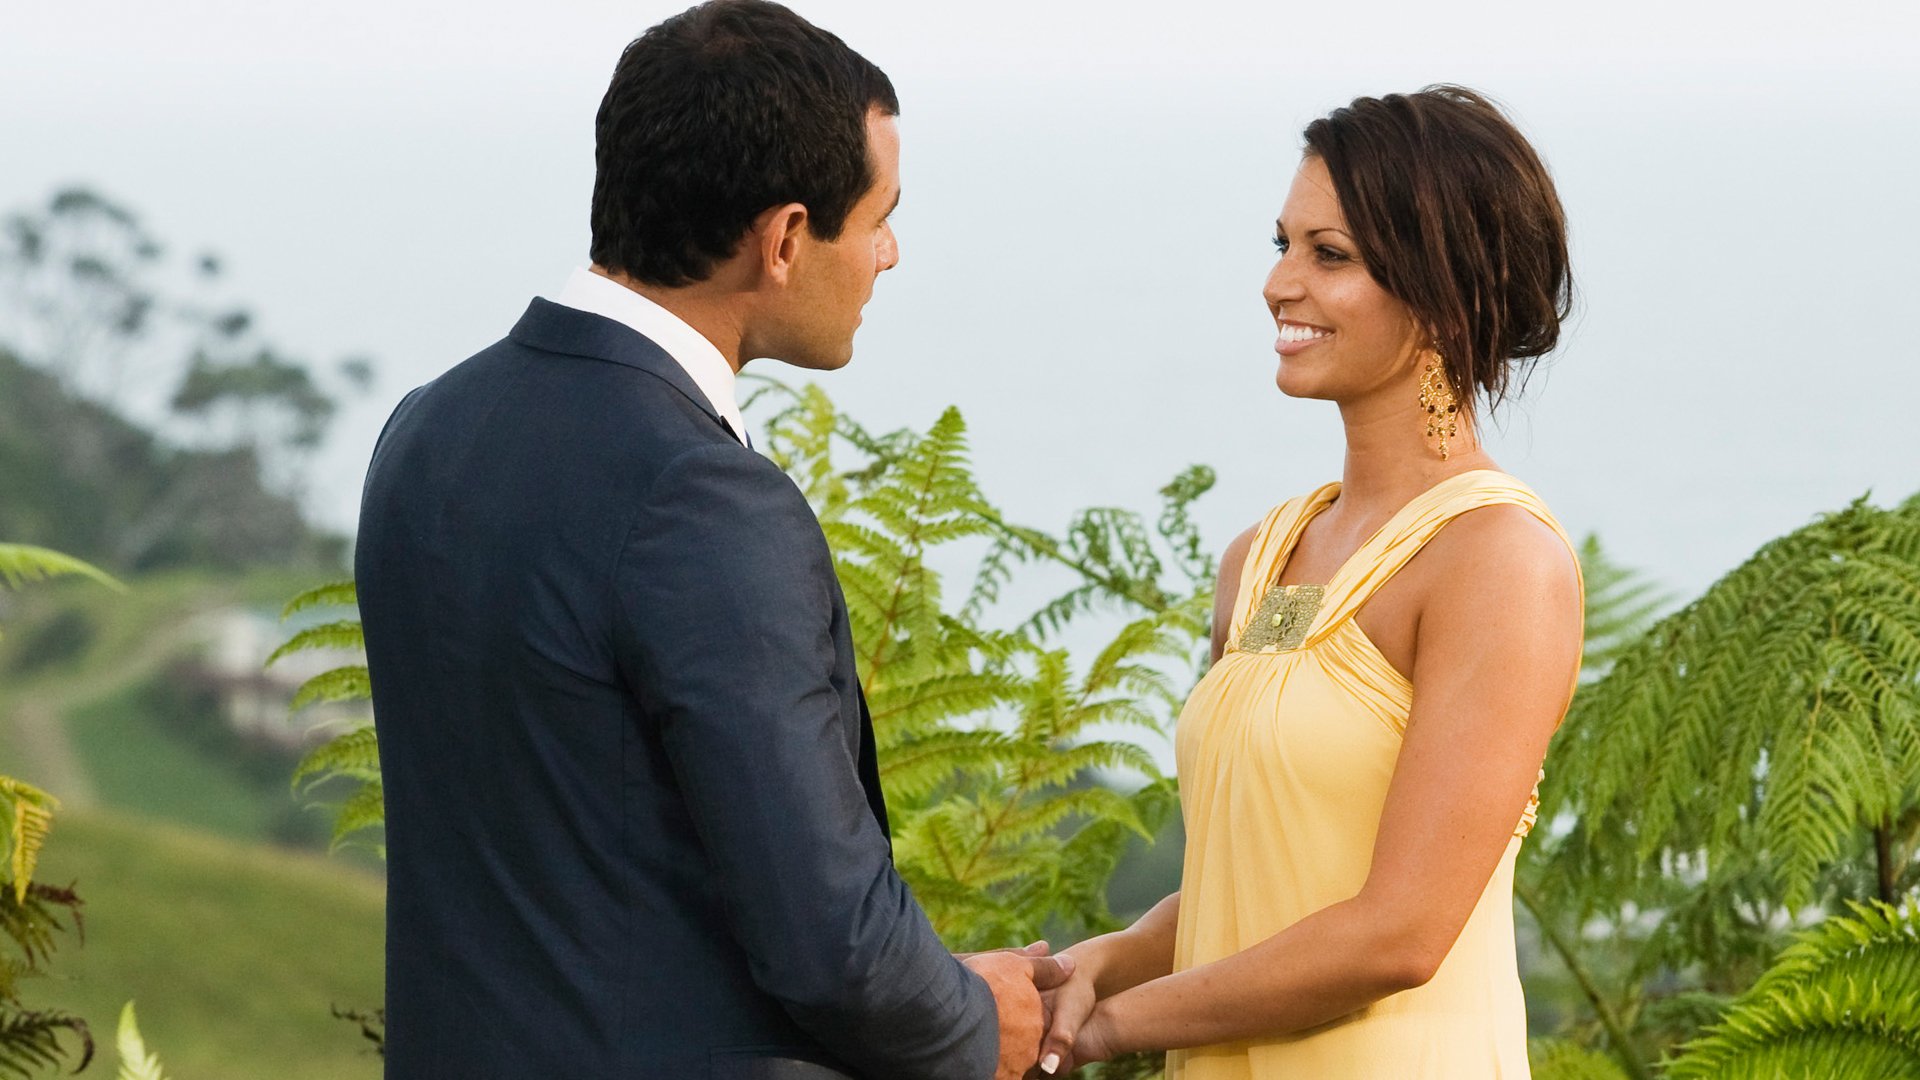 Jason Mesnick and Melissa Rycroft on 'The Bachelor' Season 13